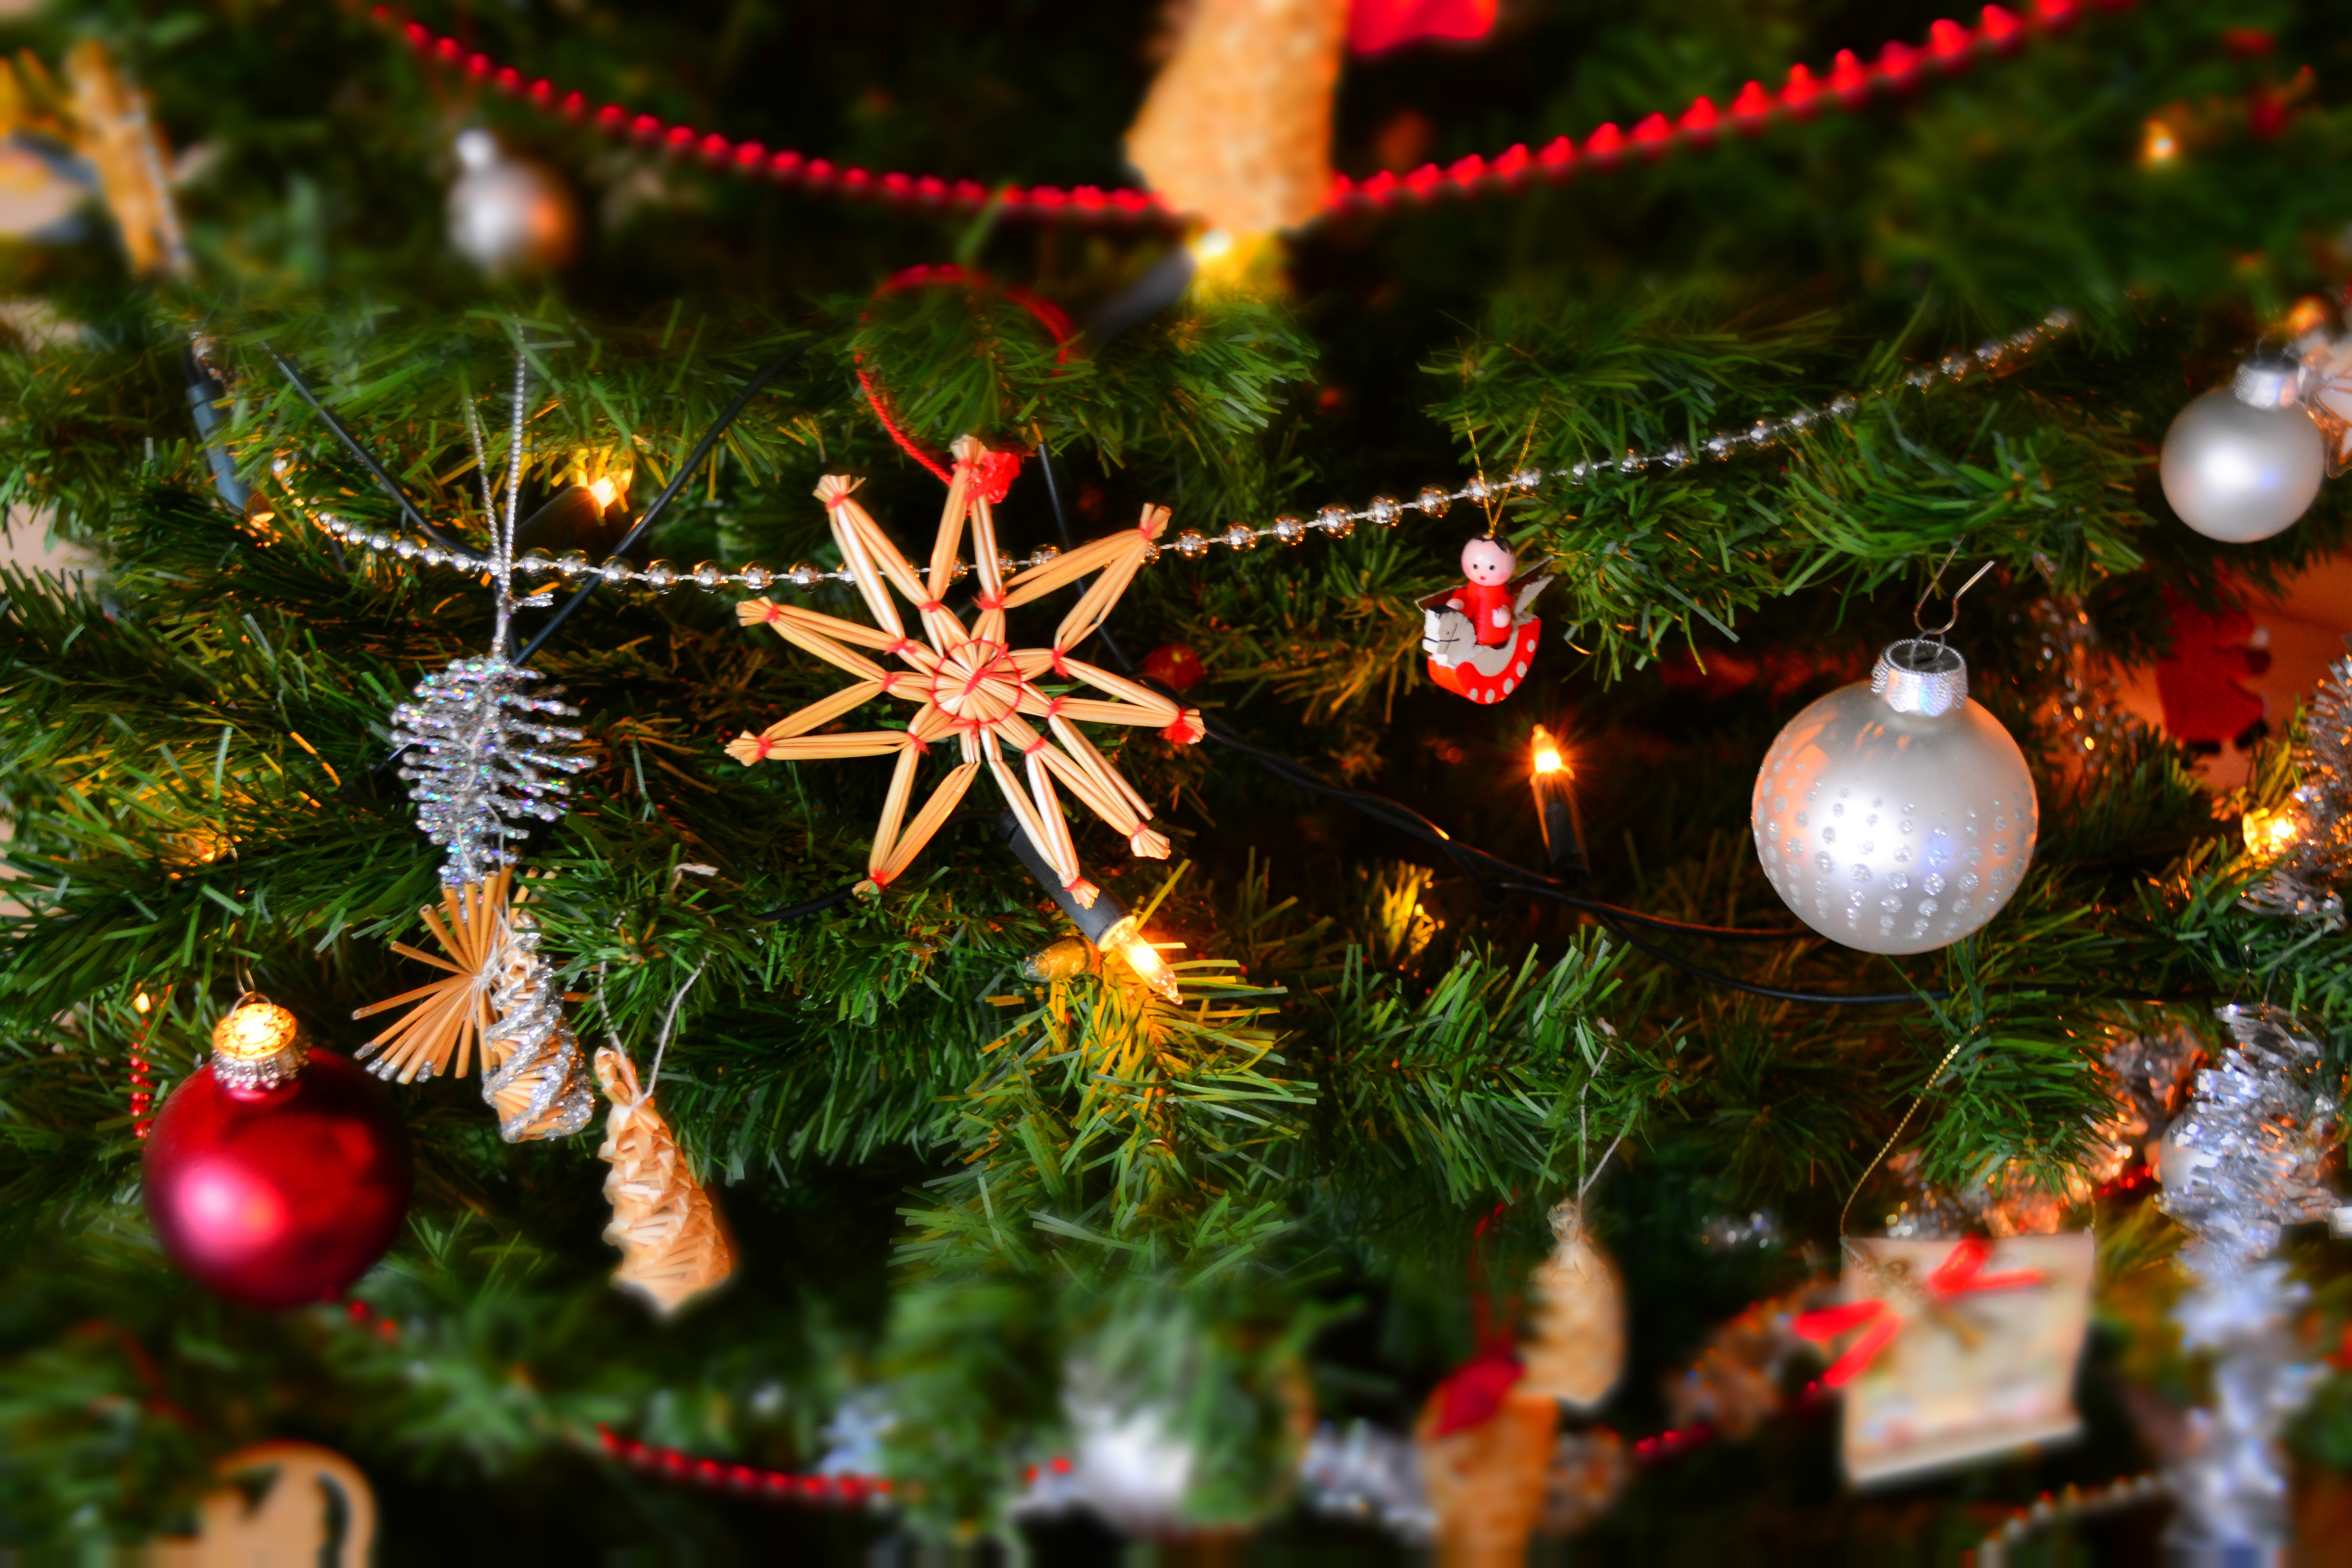 holiday decorations on tree